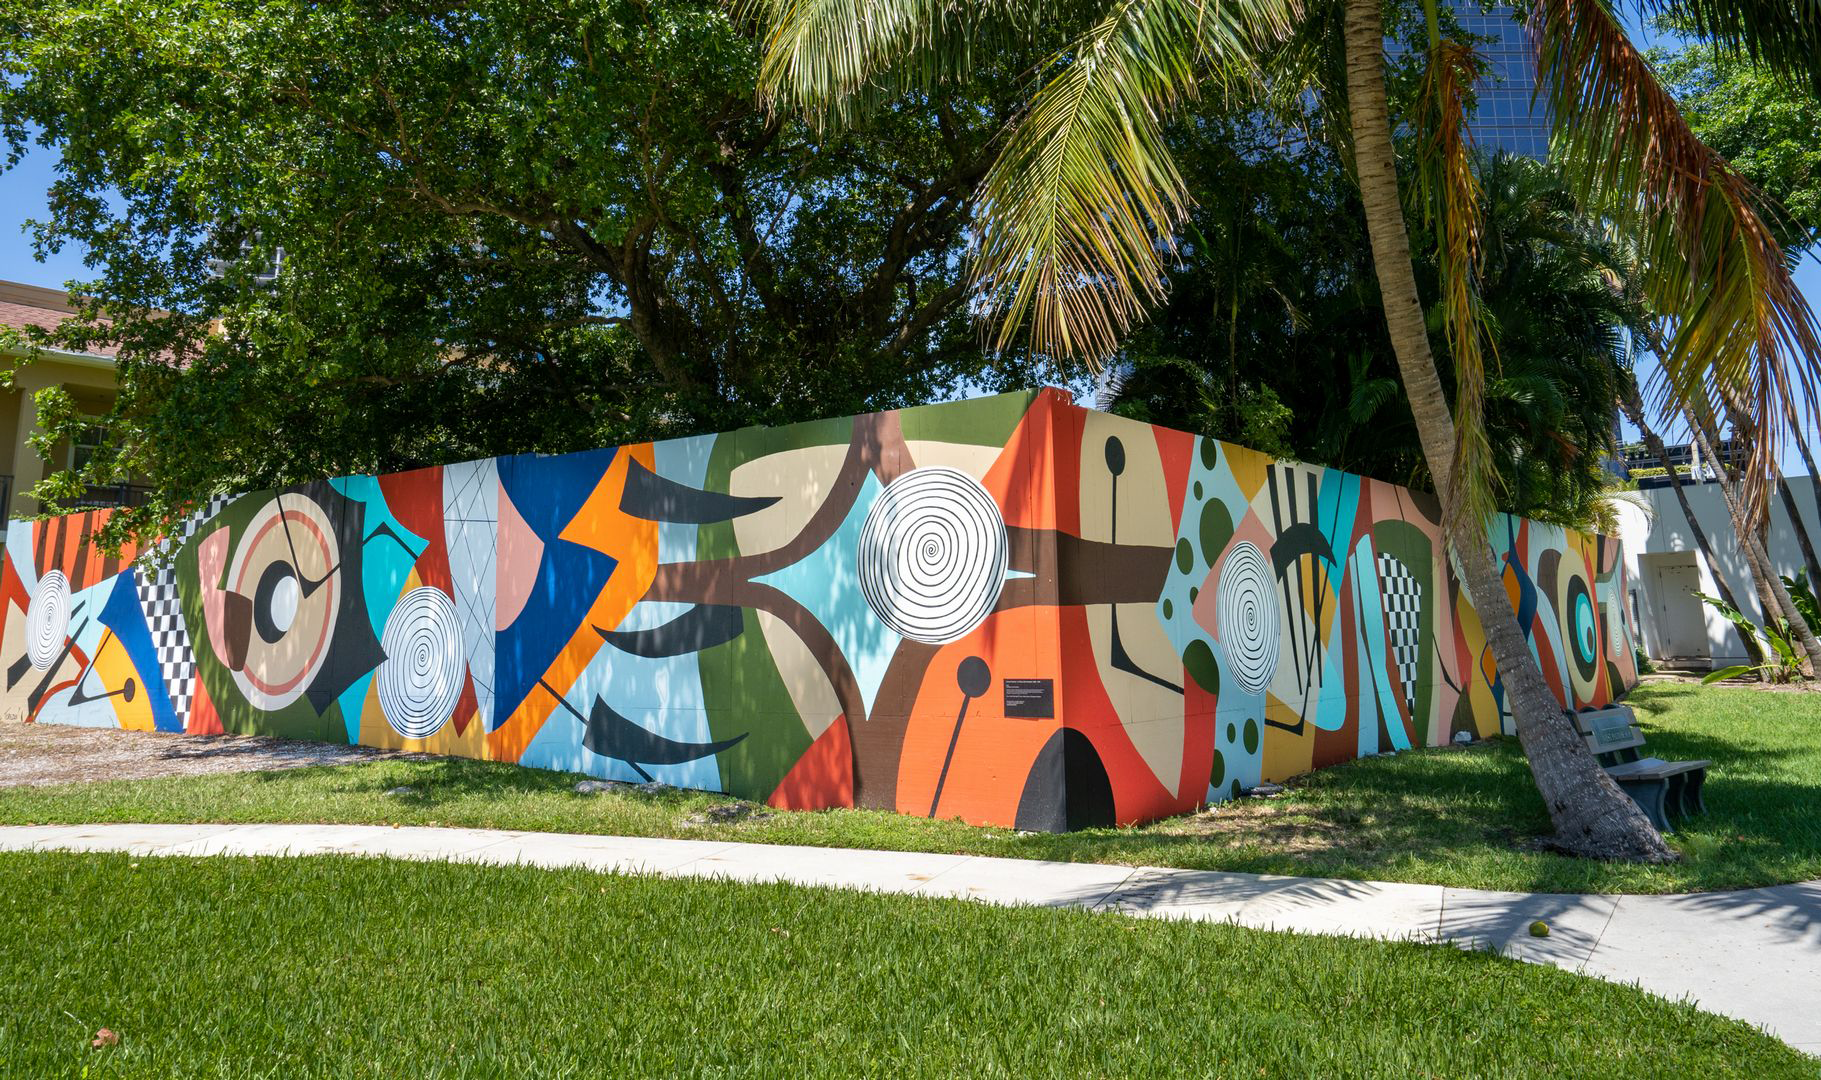 West Palm Beach Art Gallery